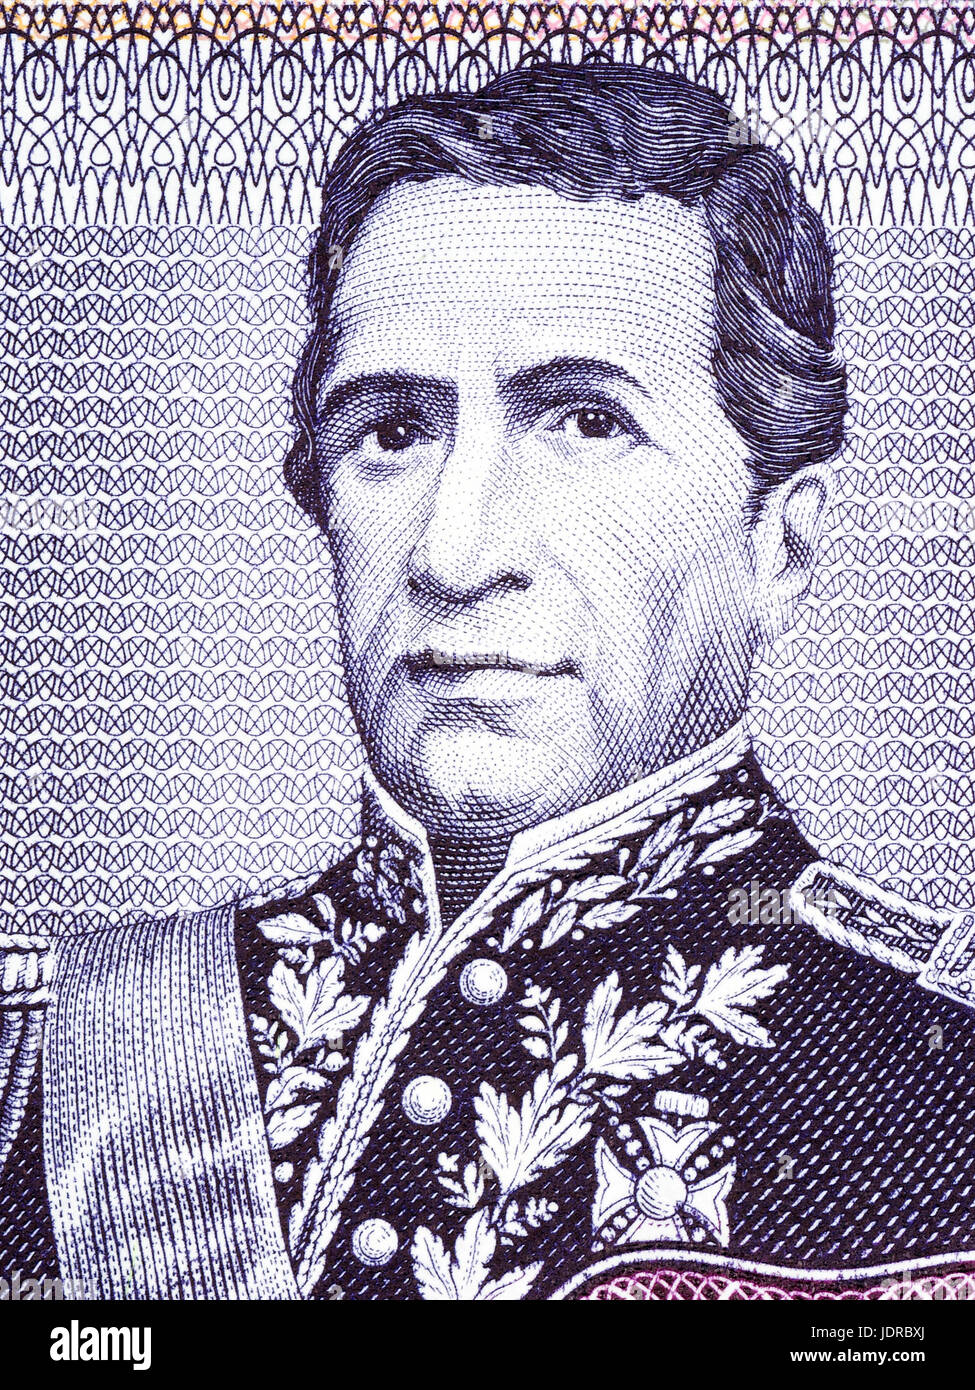 Andres de Santa Cruz portrait from Bolivian money Stock Photo